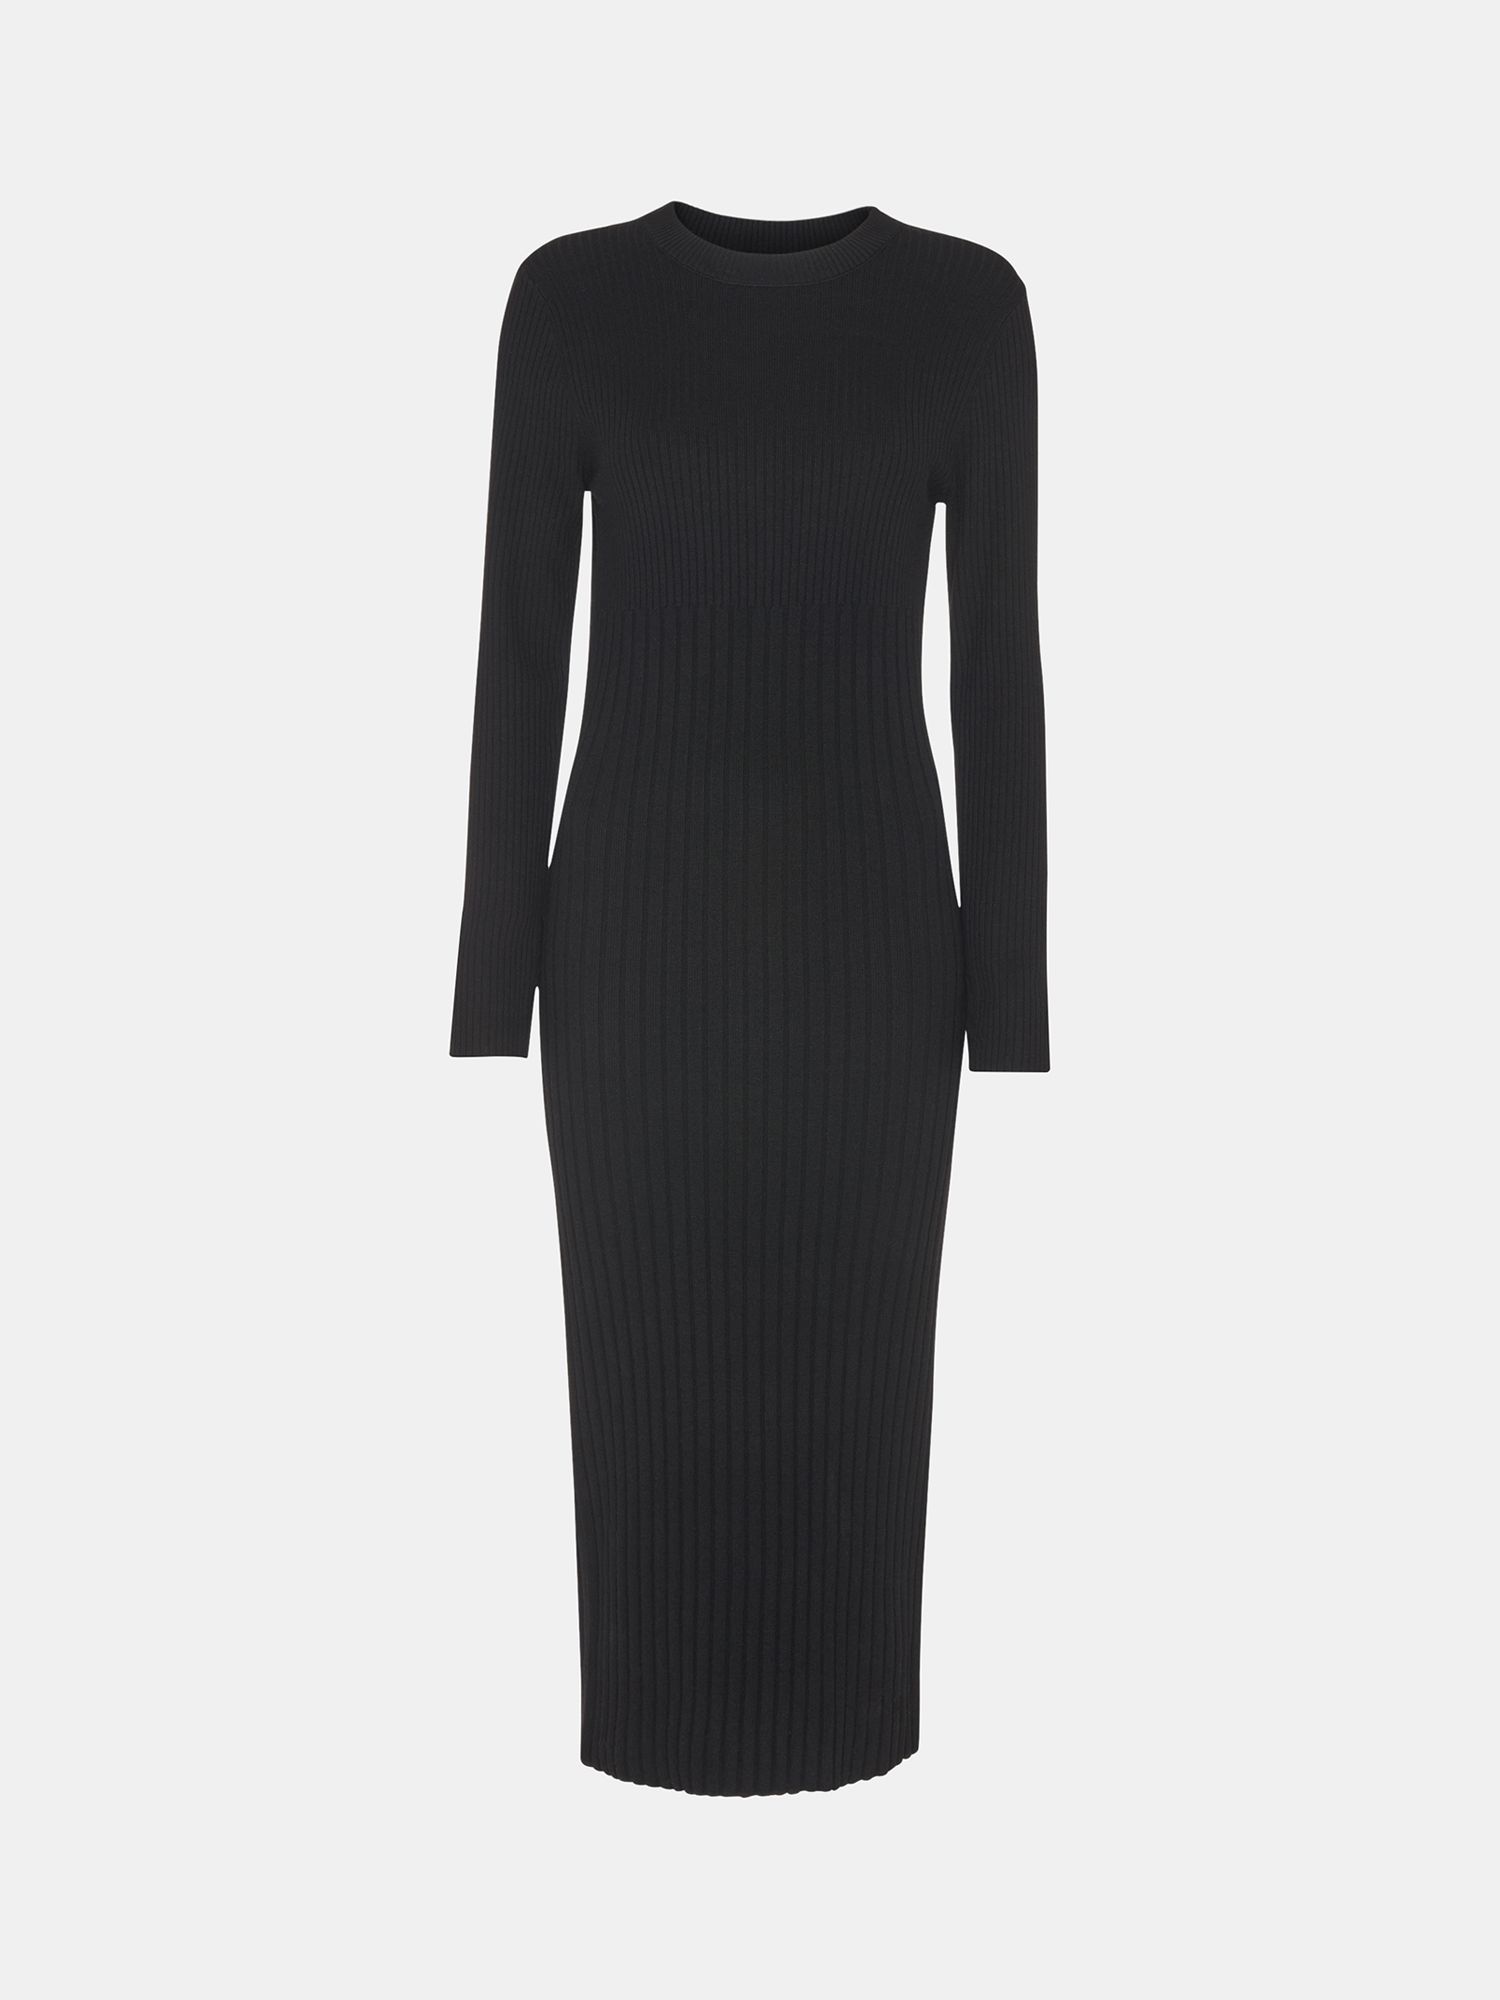 Whistles Ribbed Knitted Midi Dress, Black at John Lewis & Partners